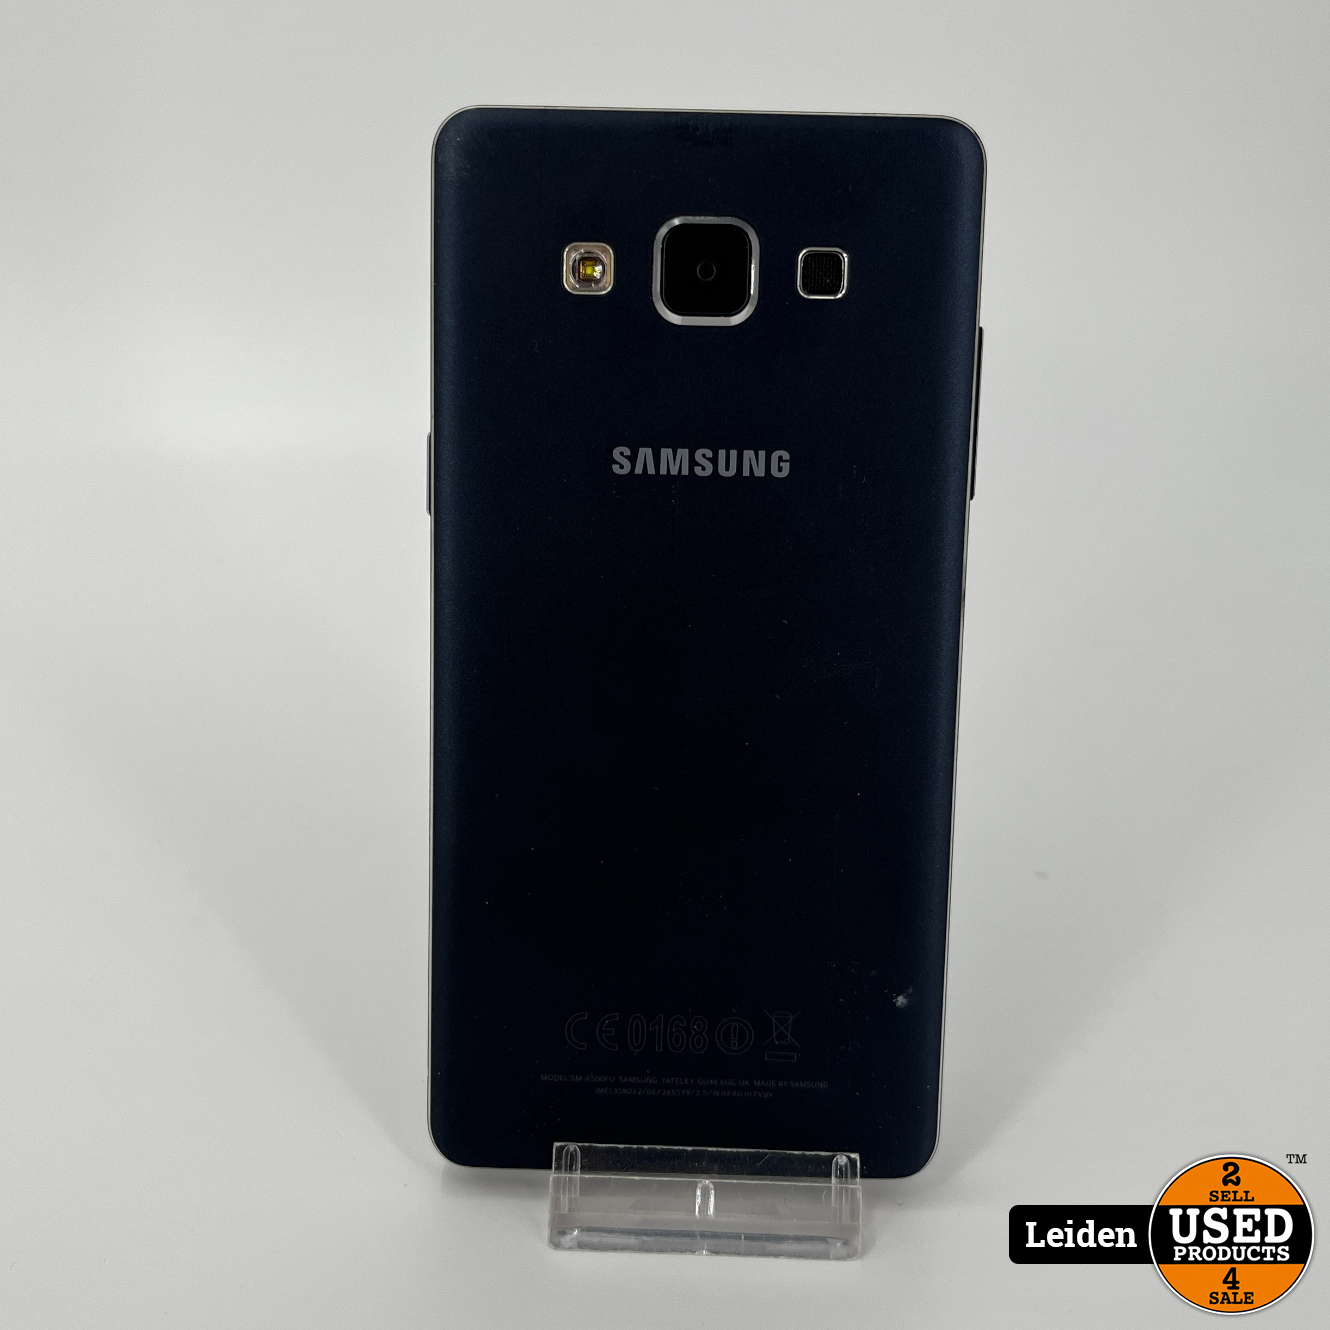 verkiezen contrast lichtgewicht Samsung Galaxy A5 (2015) - Zwart - Used Products Leiden